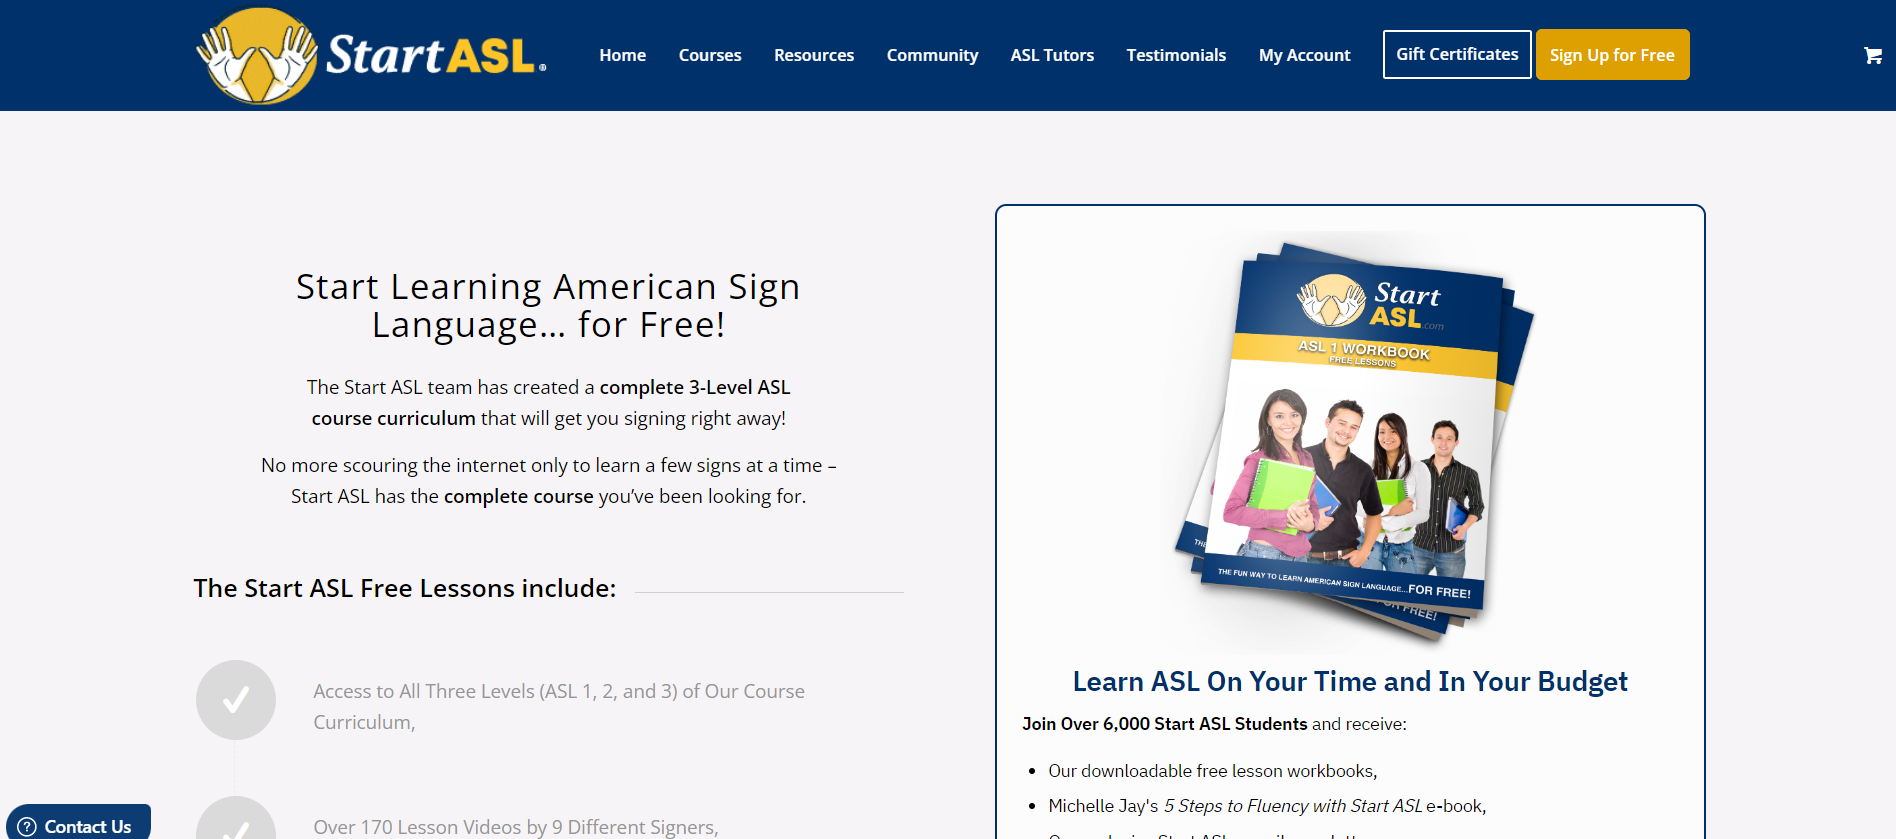 Start ASL Free Lessons